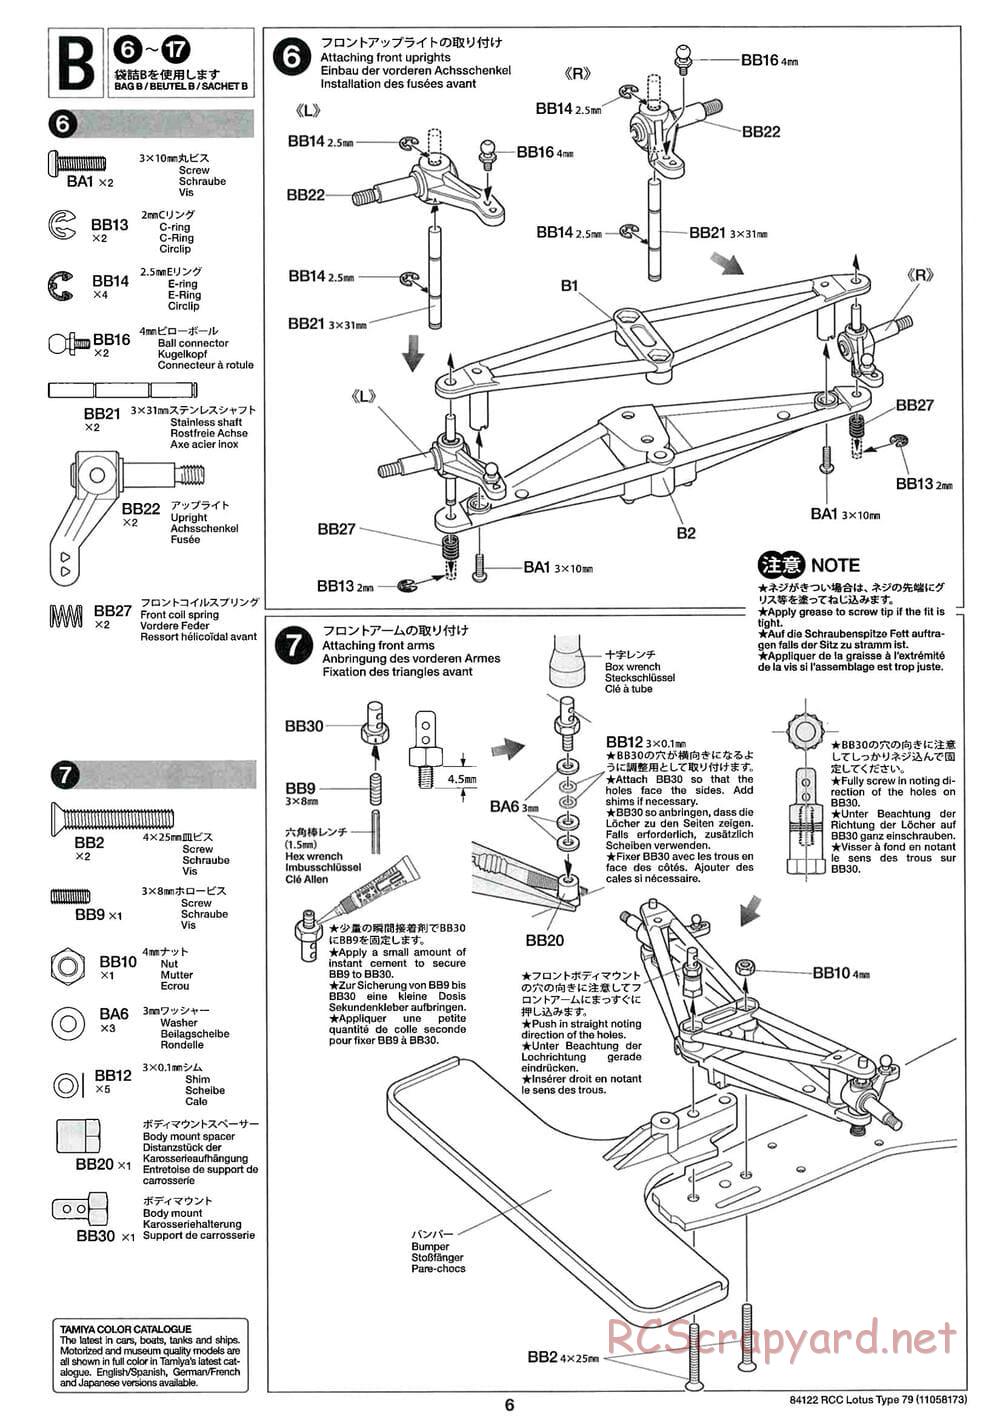 Tamiya - Lotus Type 79 - F104W Chassis - Manual - Page 6